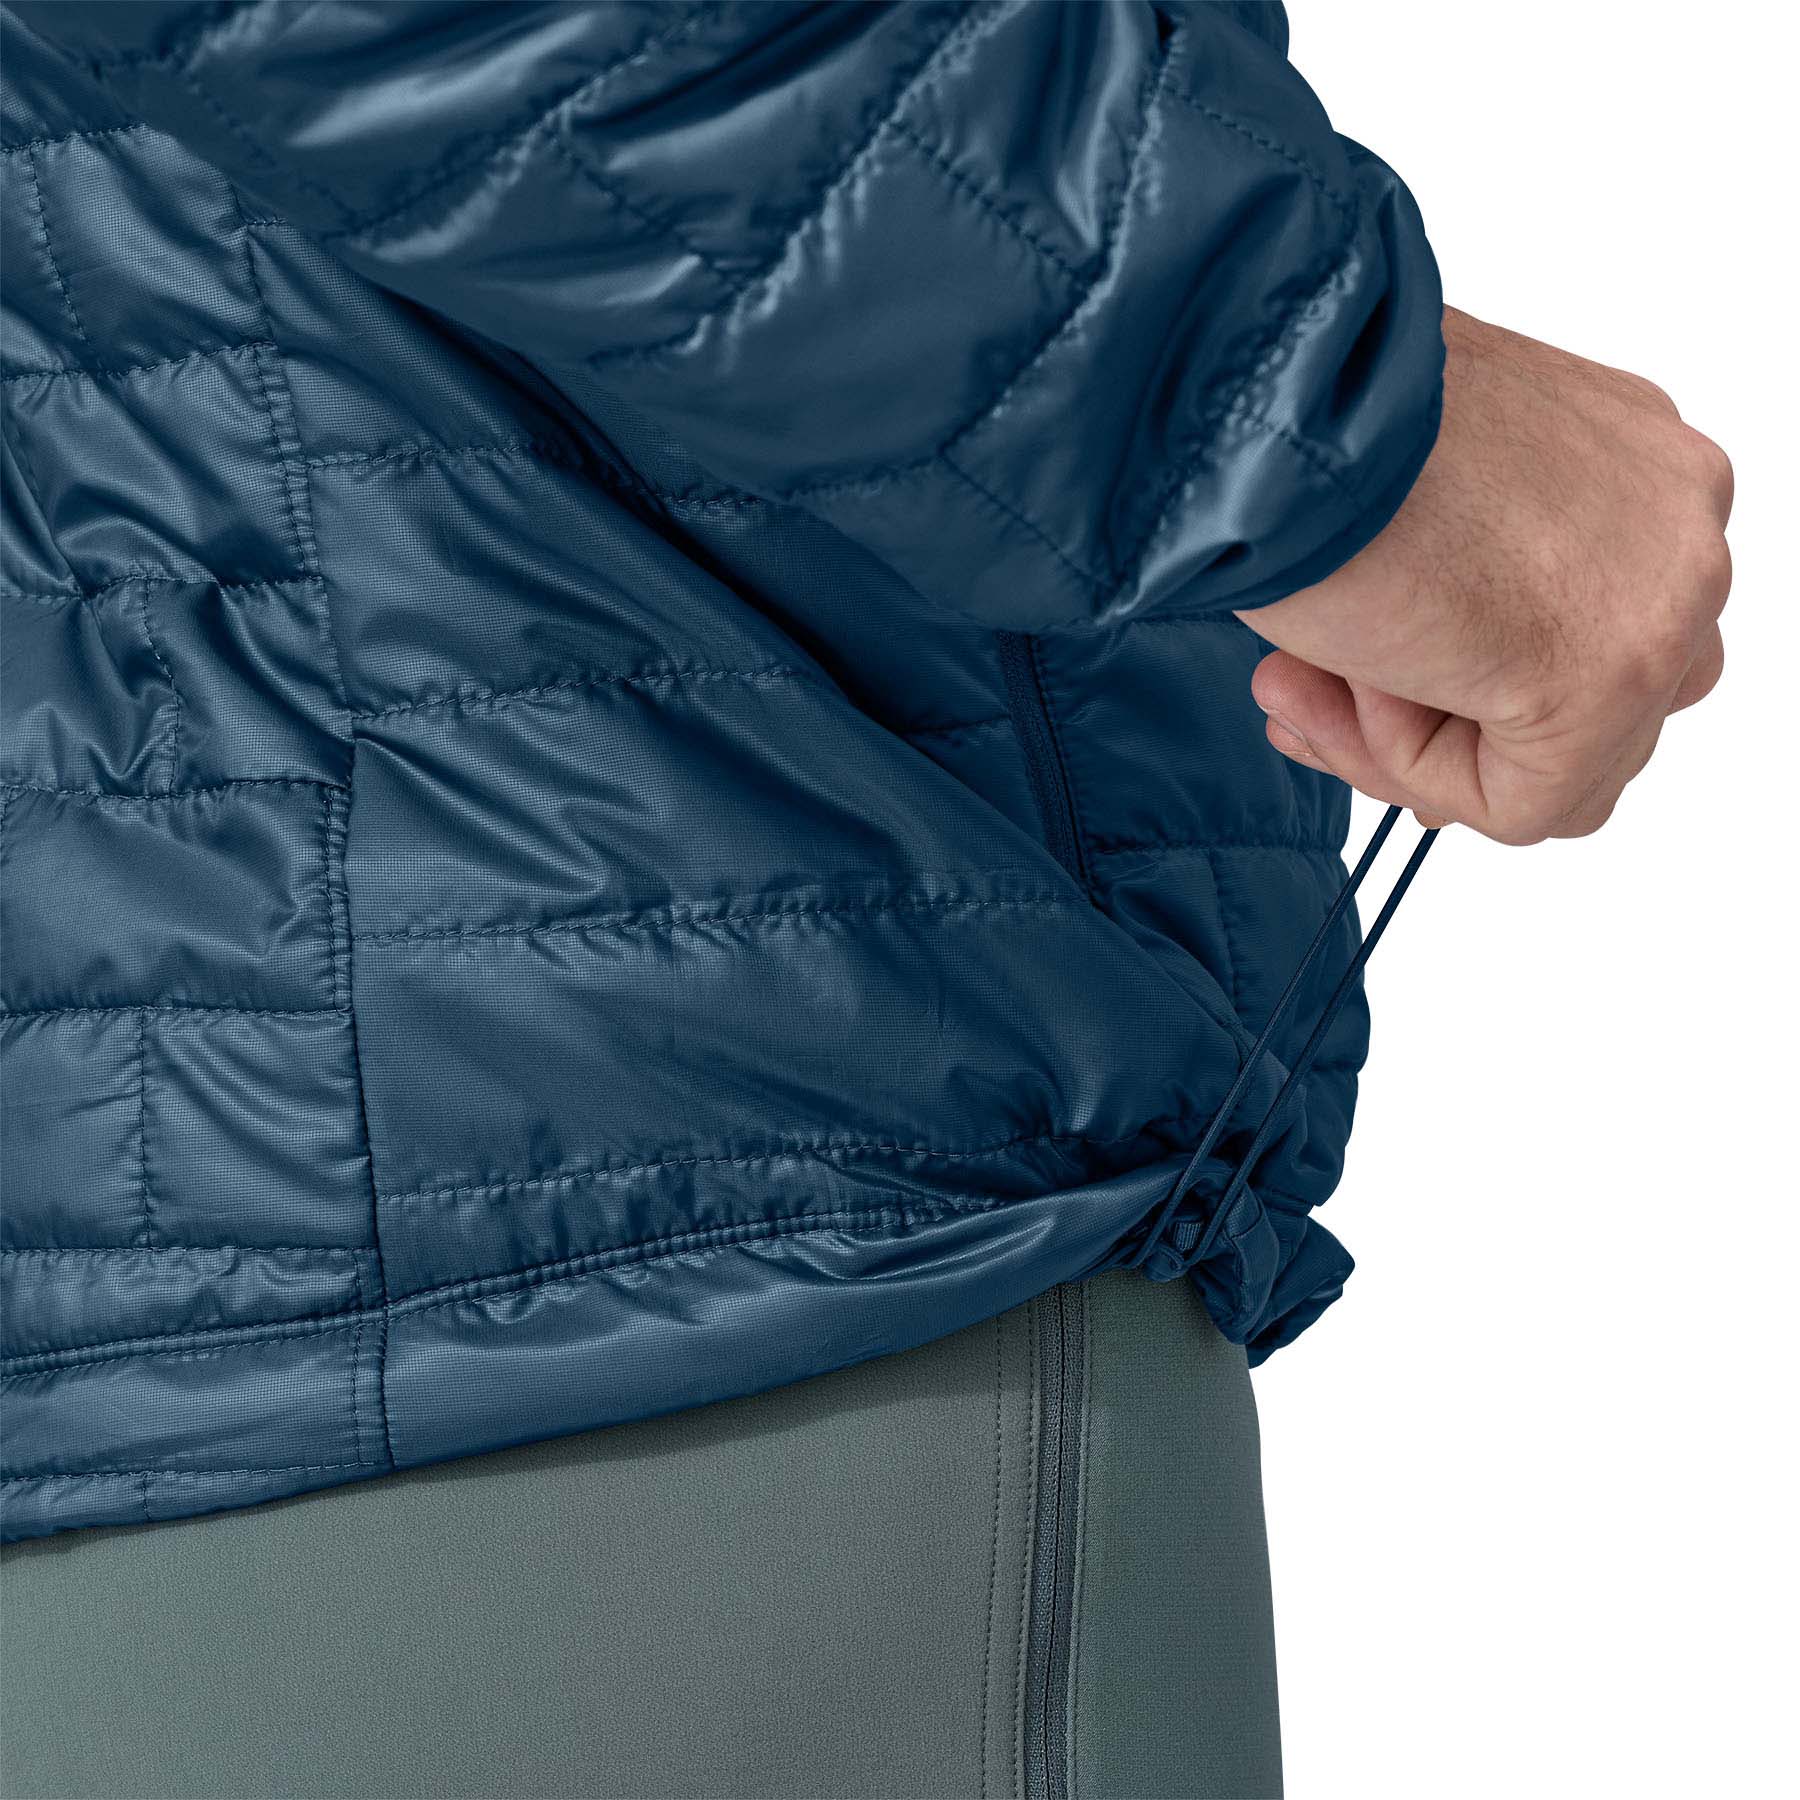 Patagonia Nano Puff Hoody Insulated Jacket